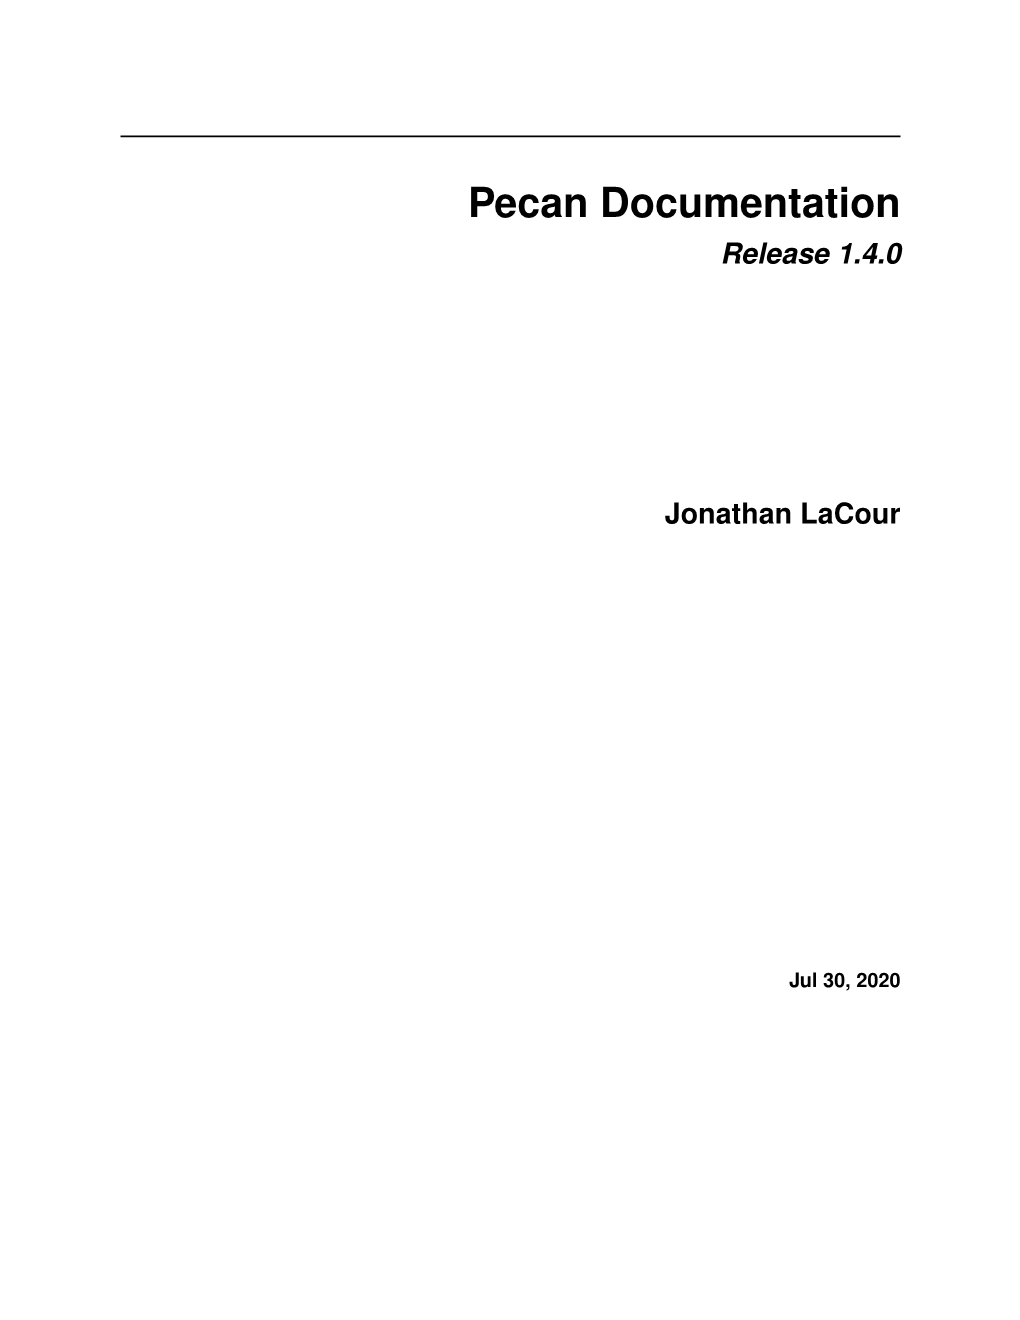 Pecan Documentation Release 1.4.0